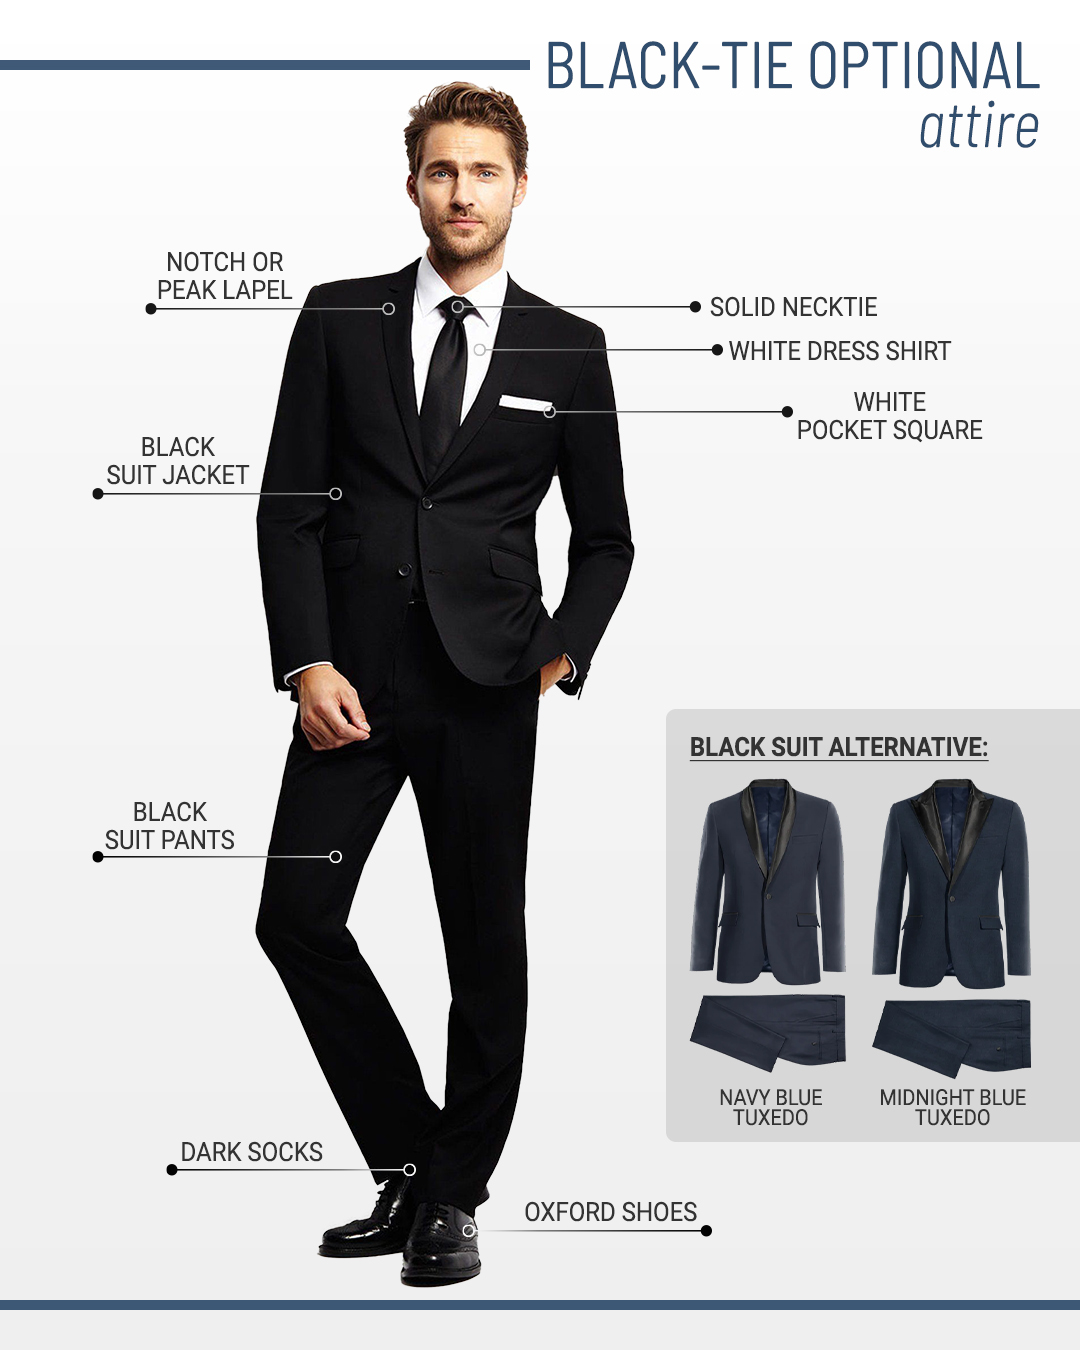 black-tie optional dress code and attire for men